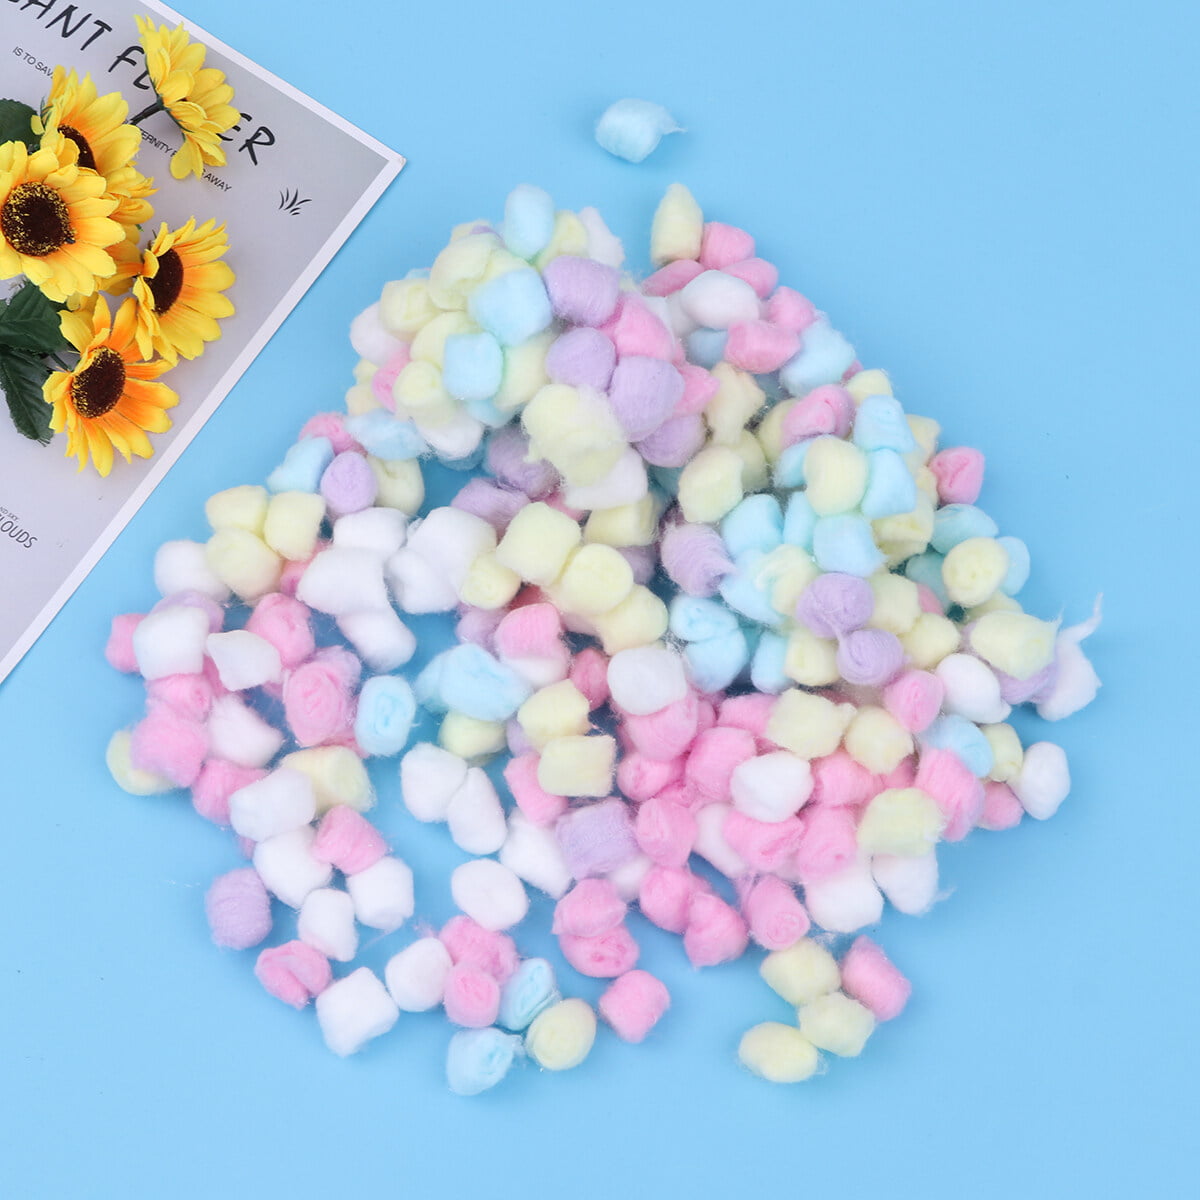 Lurrose Cotton Balls Color Makeup Cotton Balls for Home Use 1 Bag/ 500g -  AliExpress